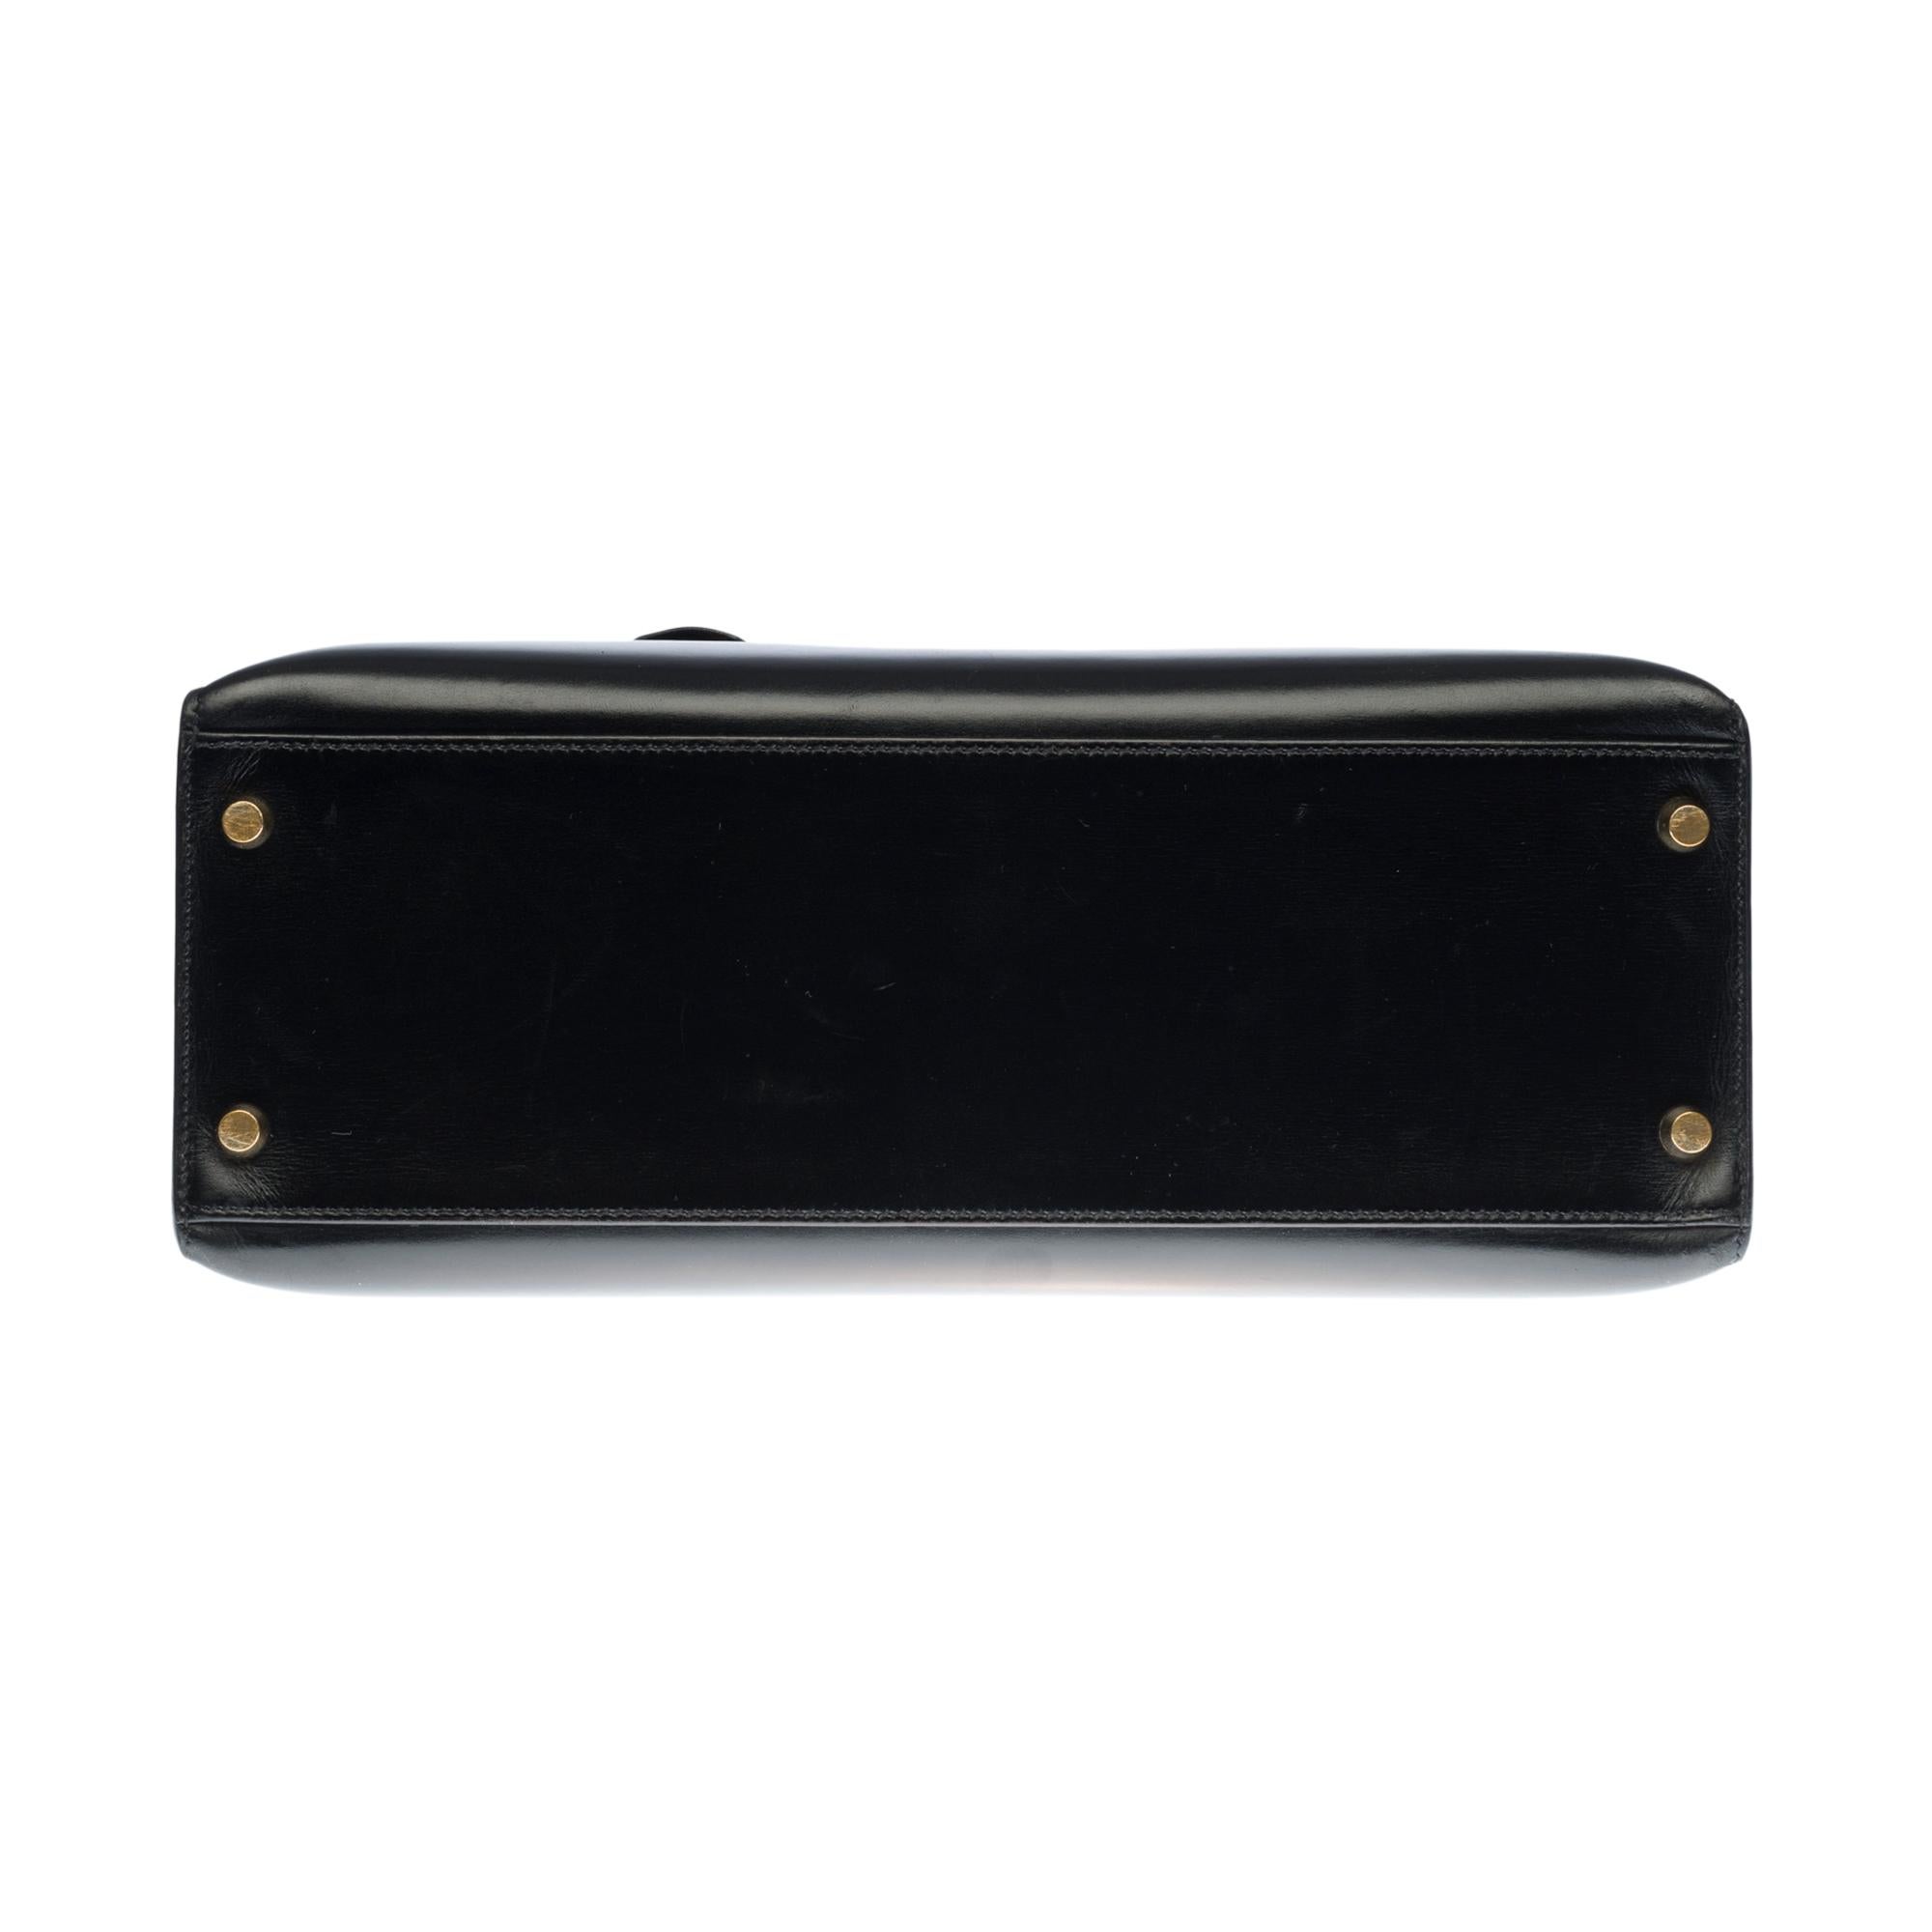 Hermès Kelly 32 handbag with strap in black box calfskin leather, GHW 2